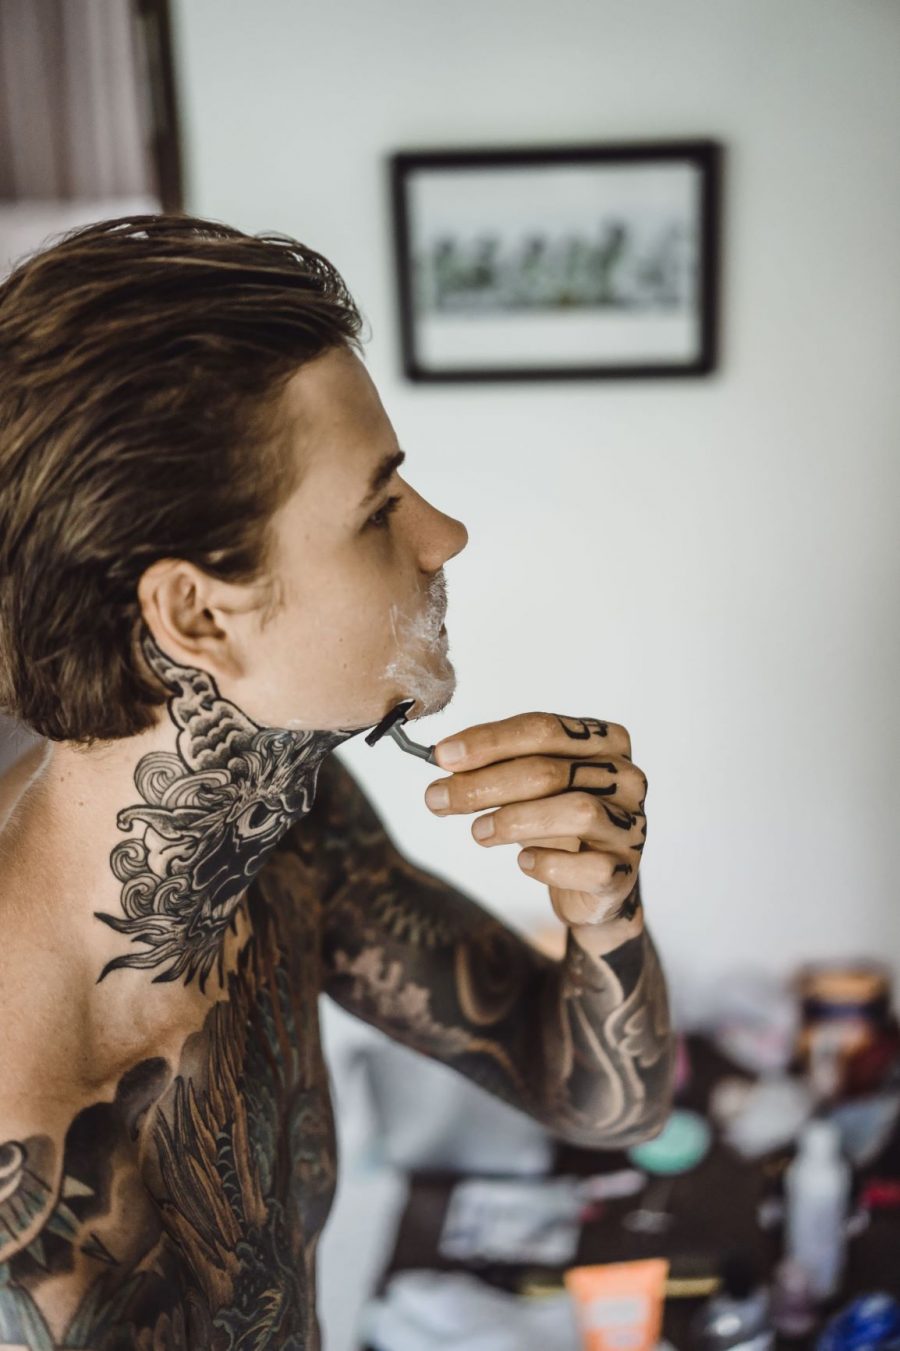 Tattoo Ink Eaten By Macrophages  Shots  Health News  NPR